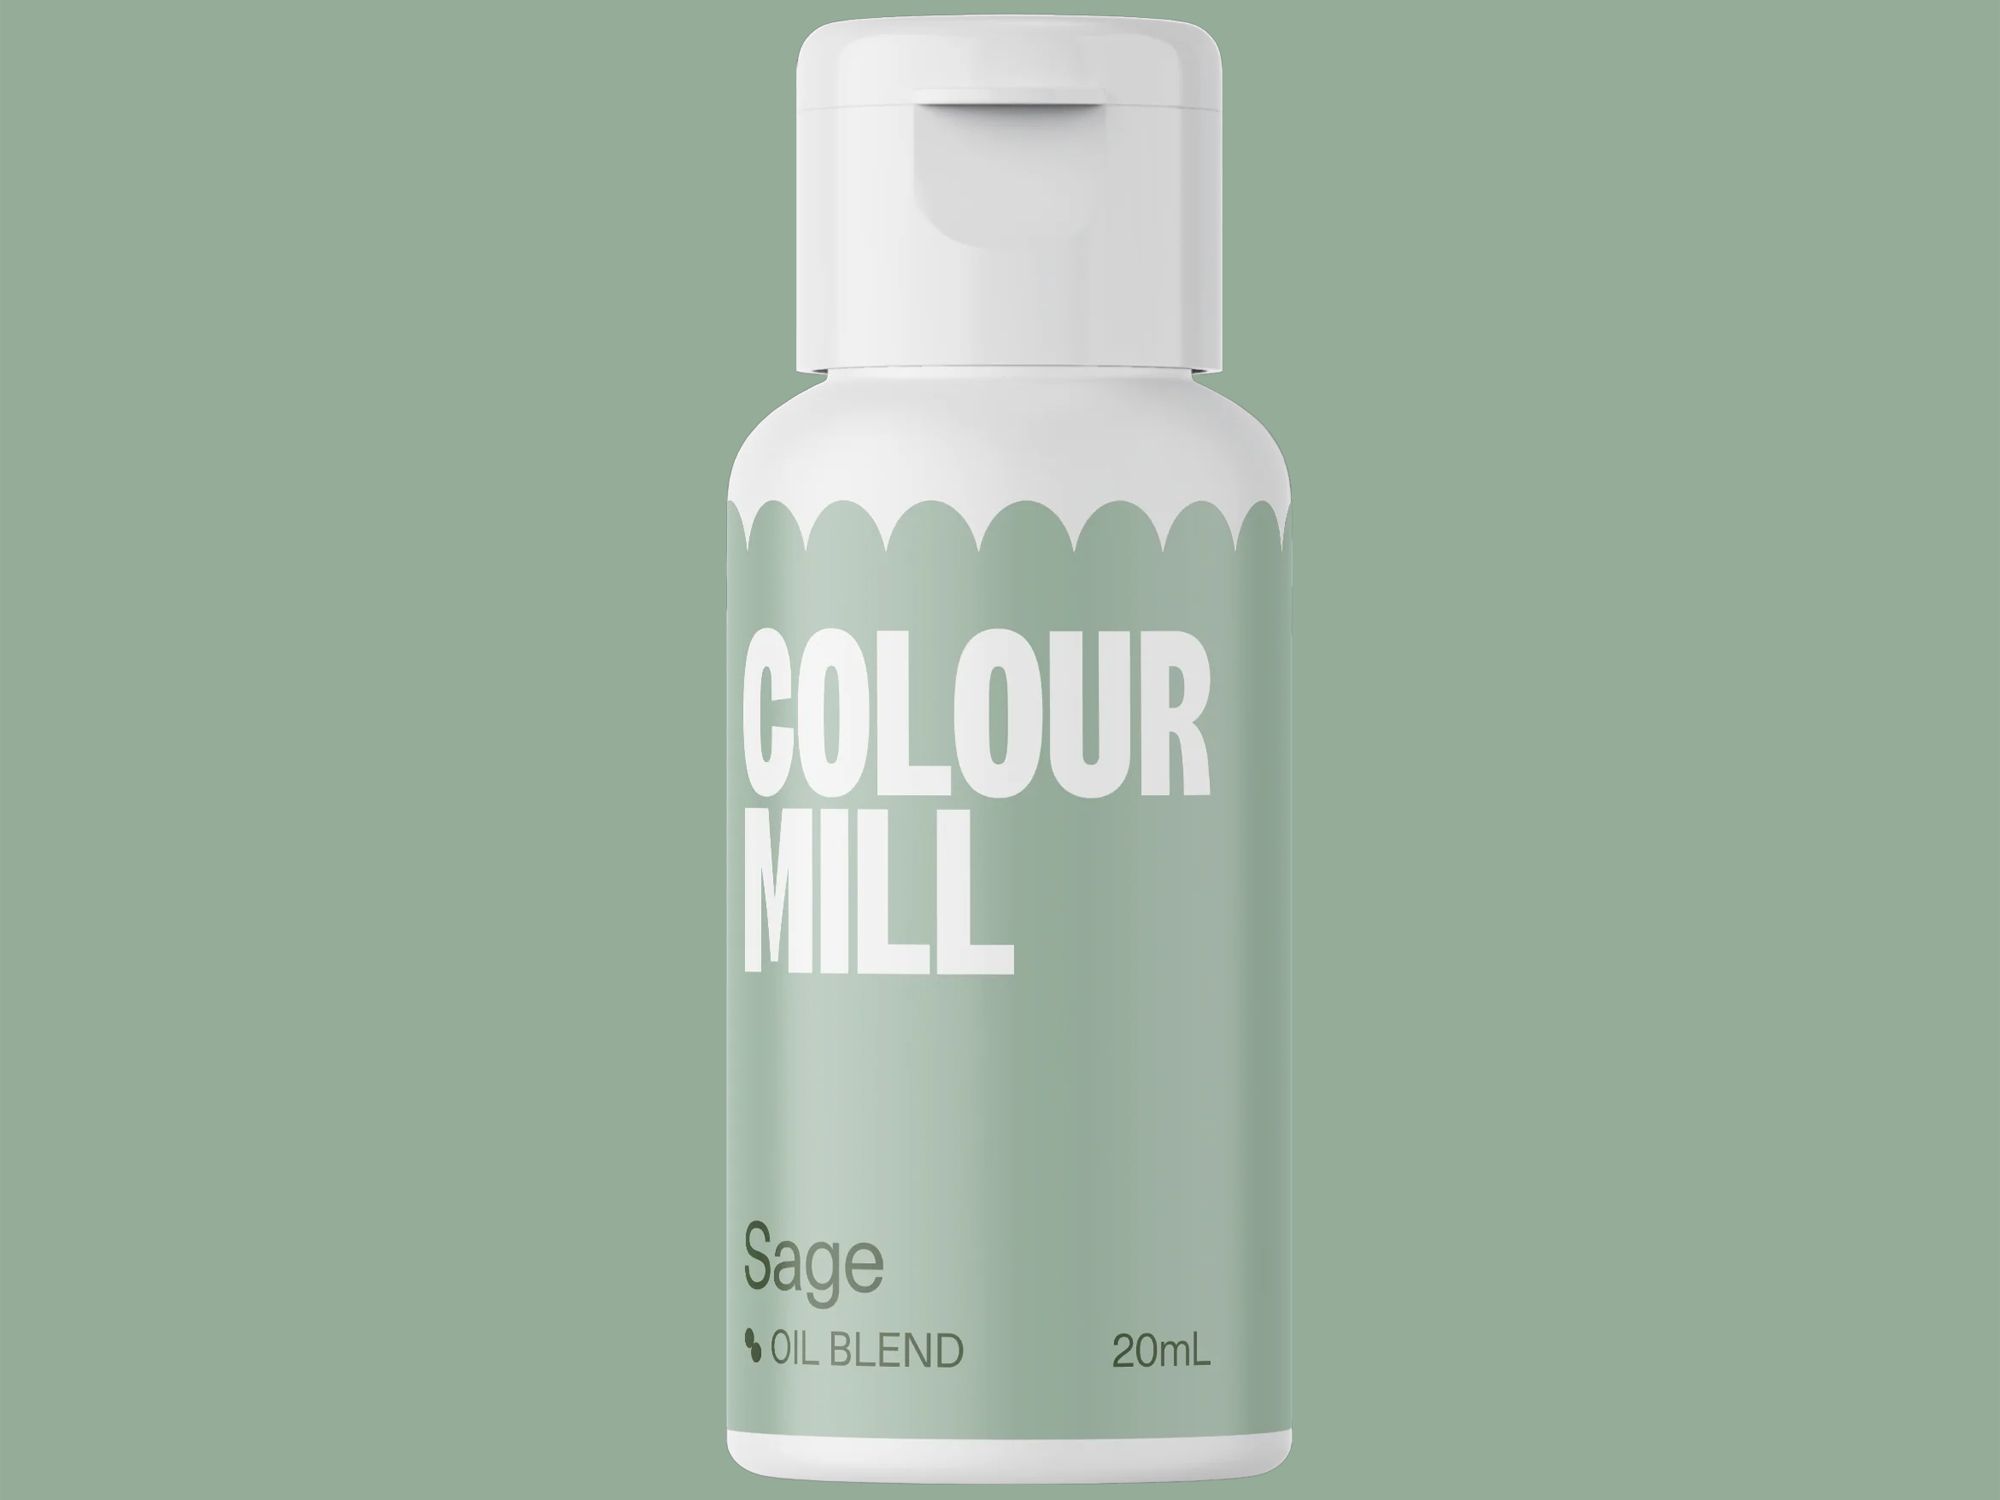 Colour Mill Sage (Oil Blend) 20ml